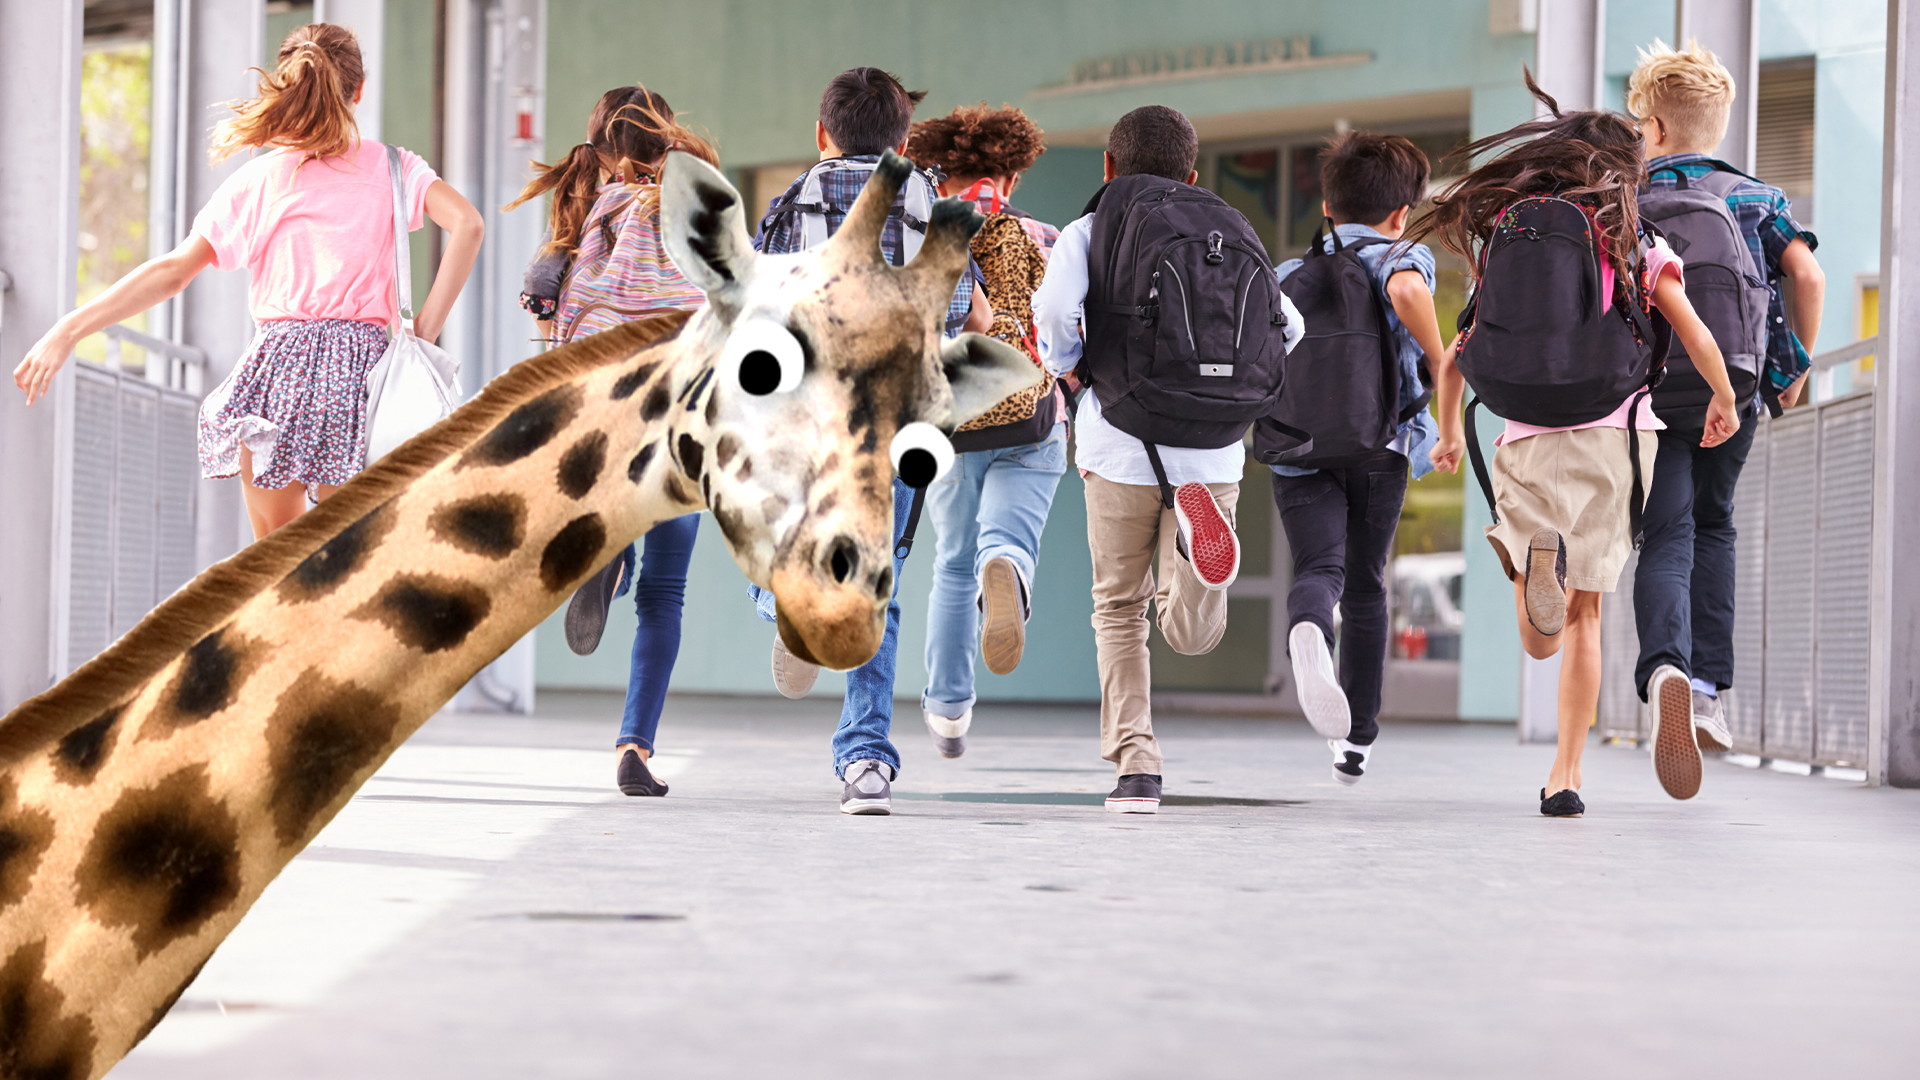 School children and surprised giraffe